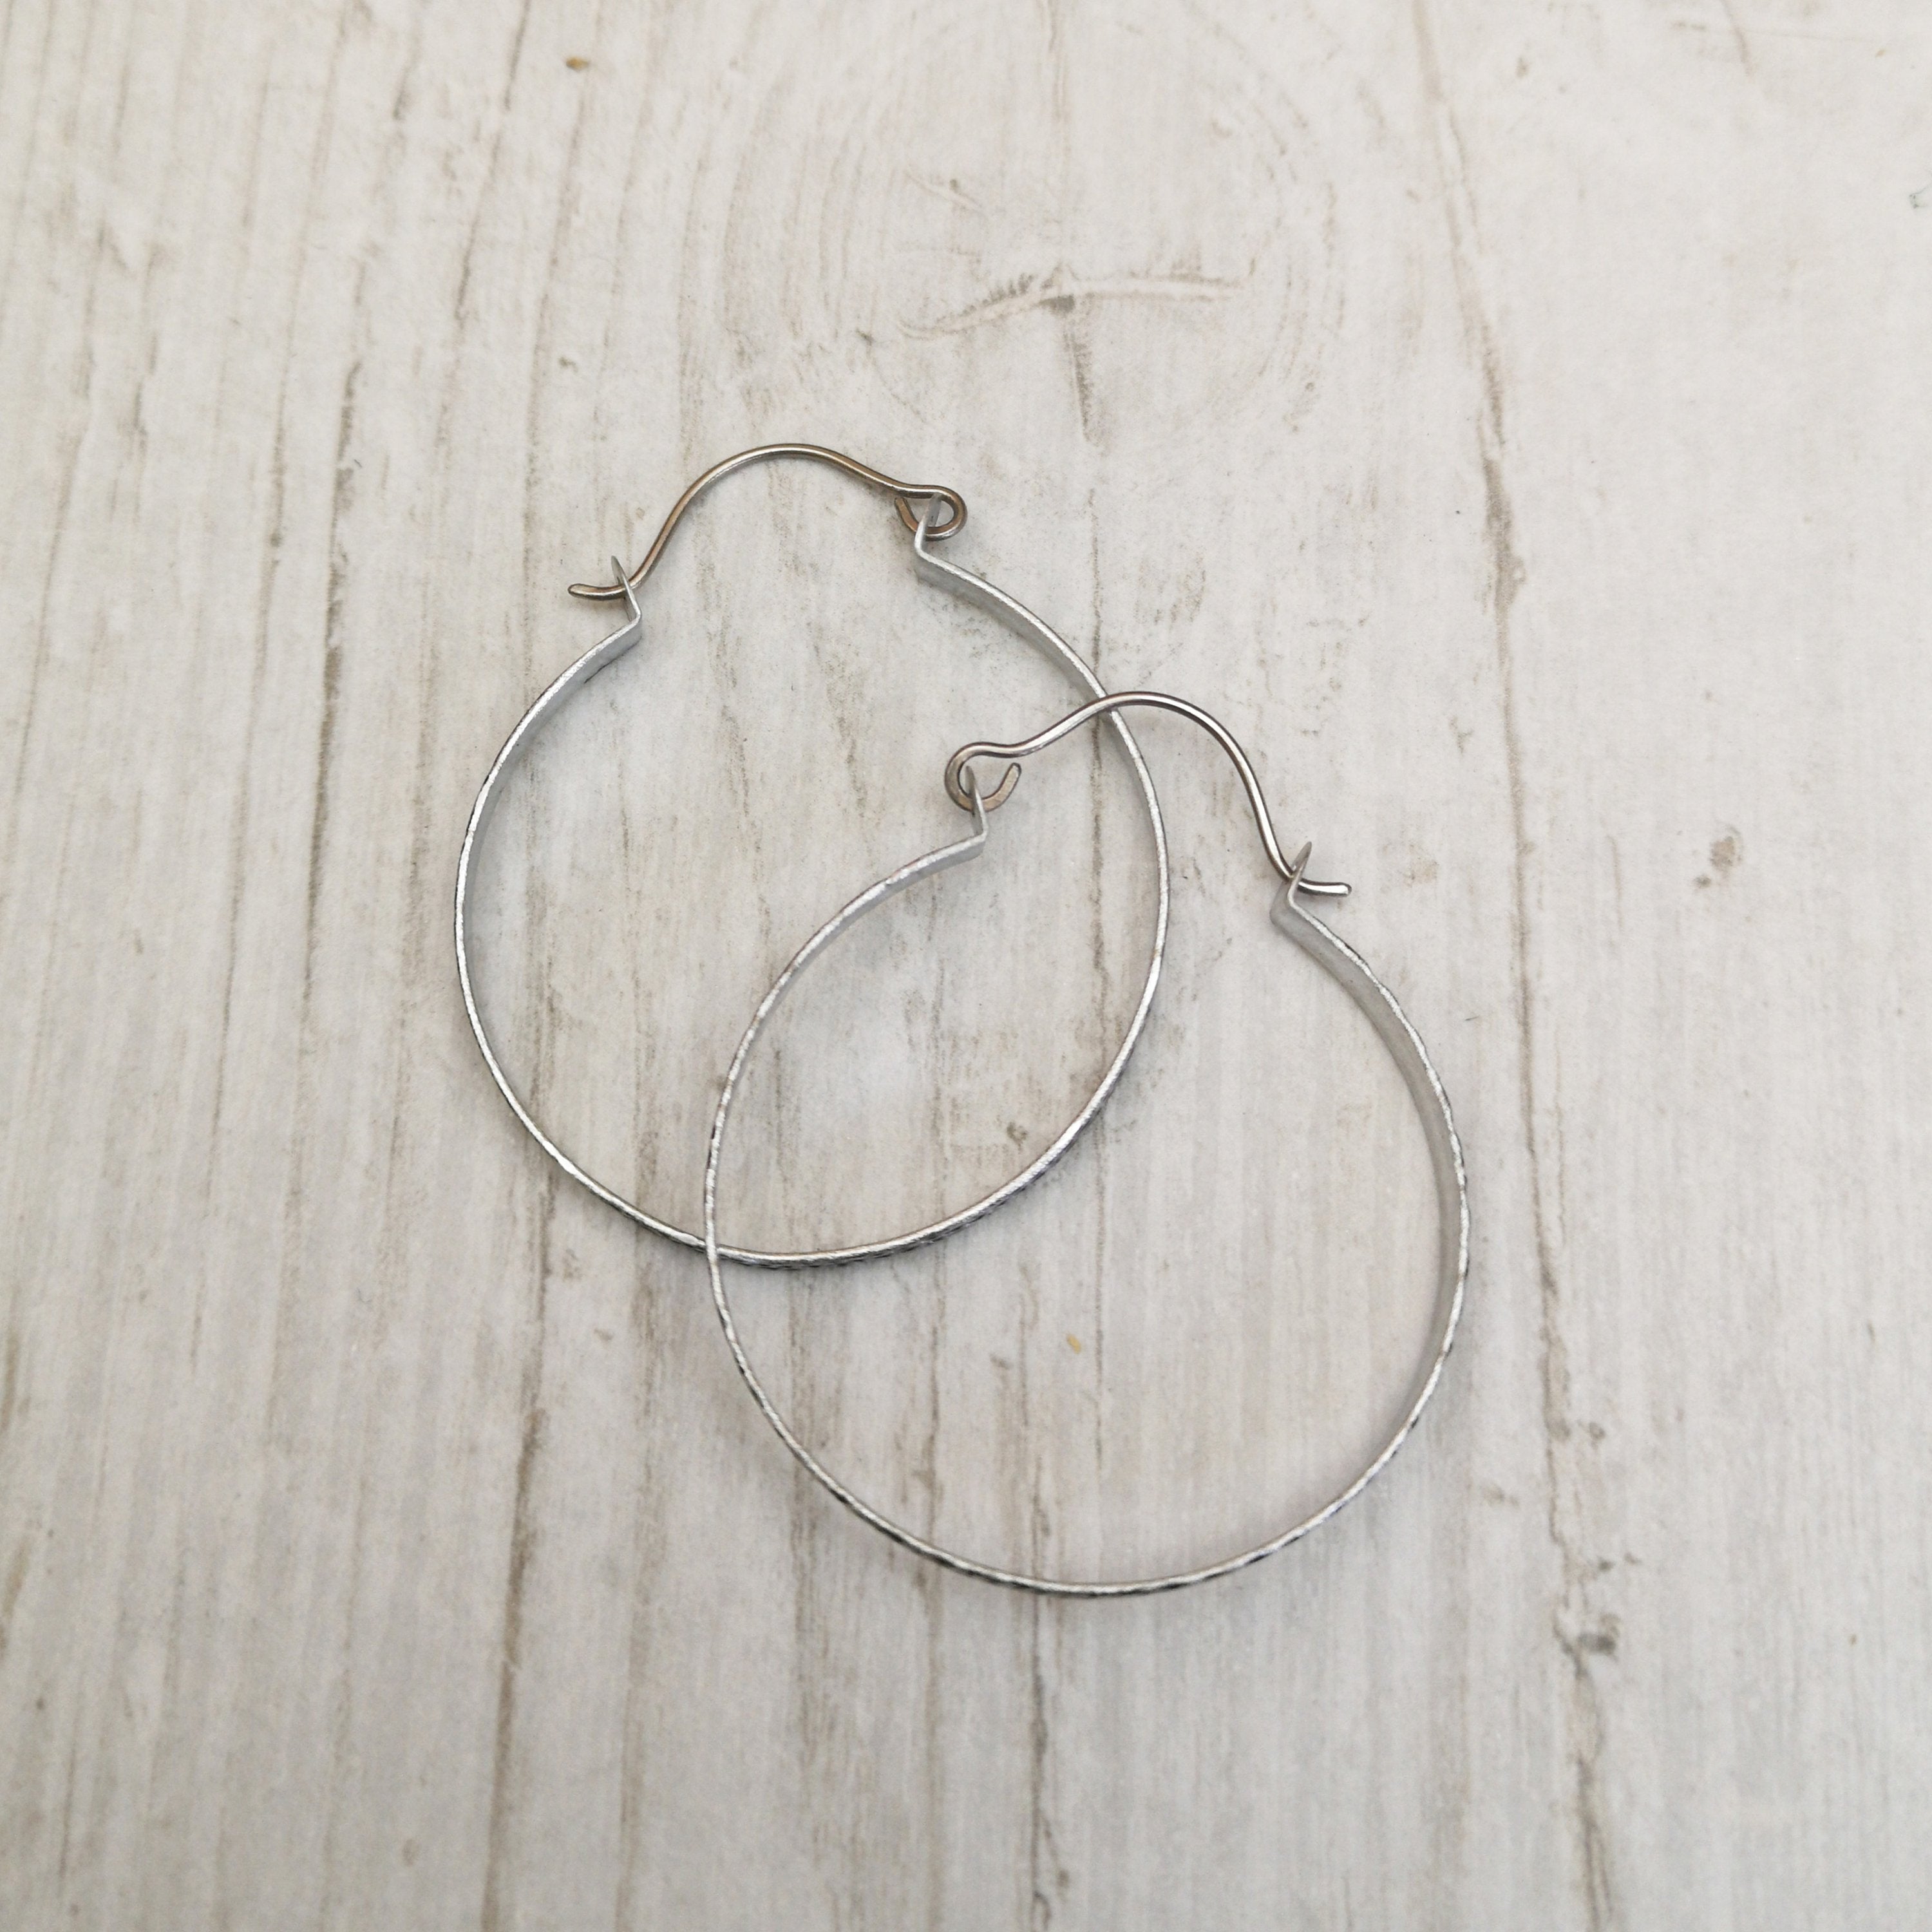 Lightweight hoop earrings - Titanium earwires - Boho hand hammered - Rustic diamond stamped unique hoops - Hypoallergenic - Madebyjenwren